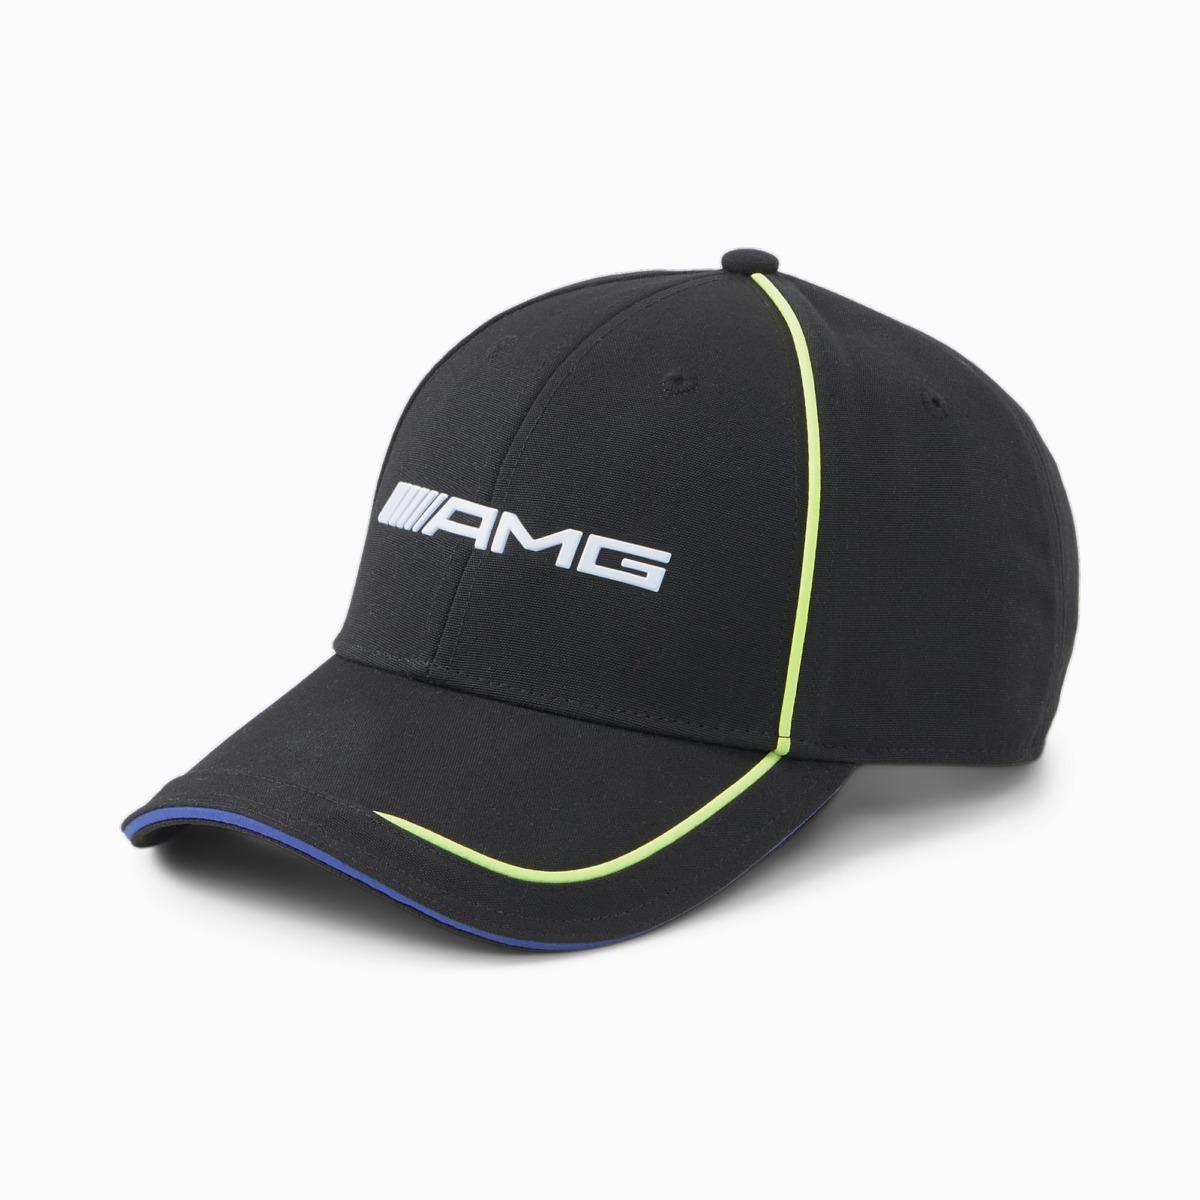 Puma Black Mercedes Amgronas Motorsport Cap For Men Mens CAPS GOOFASH